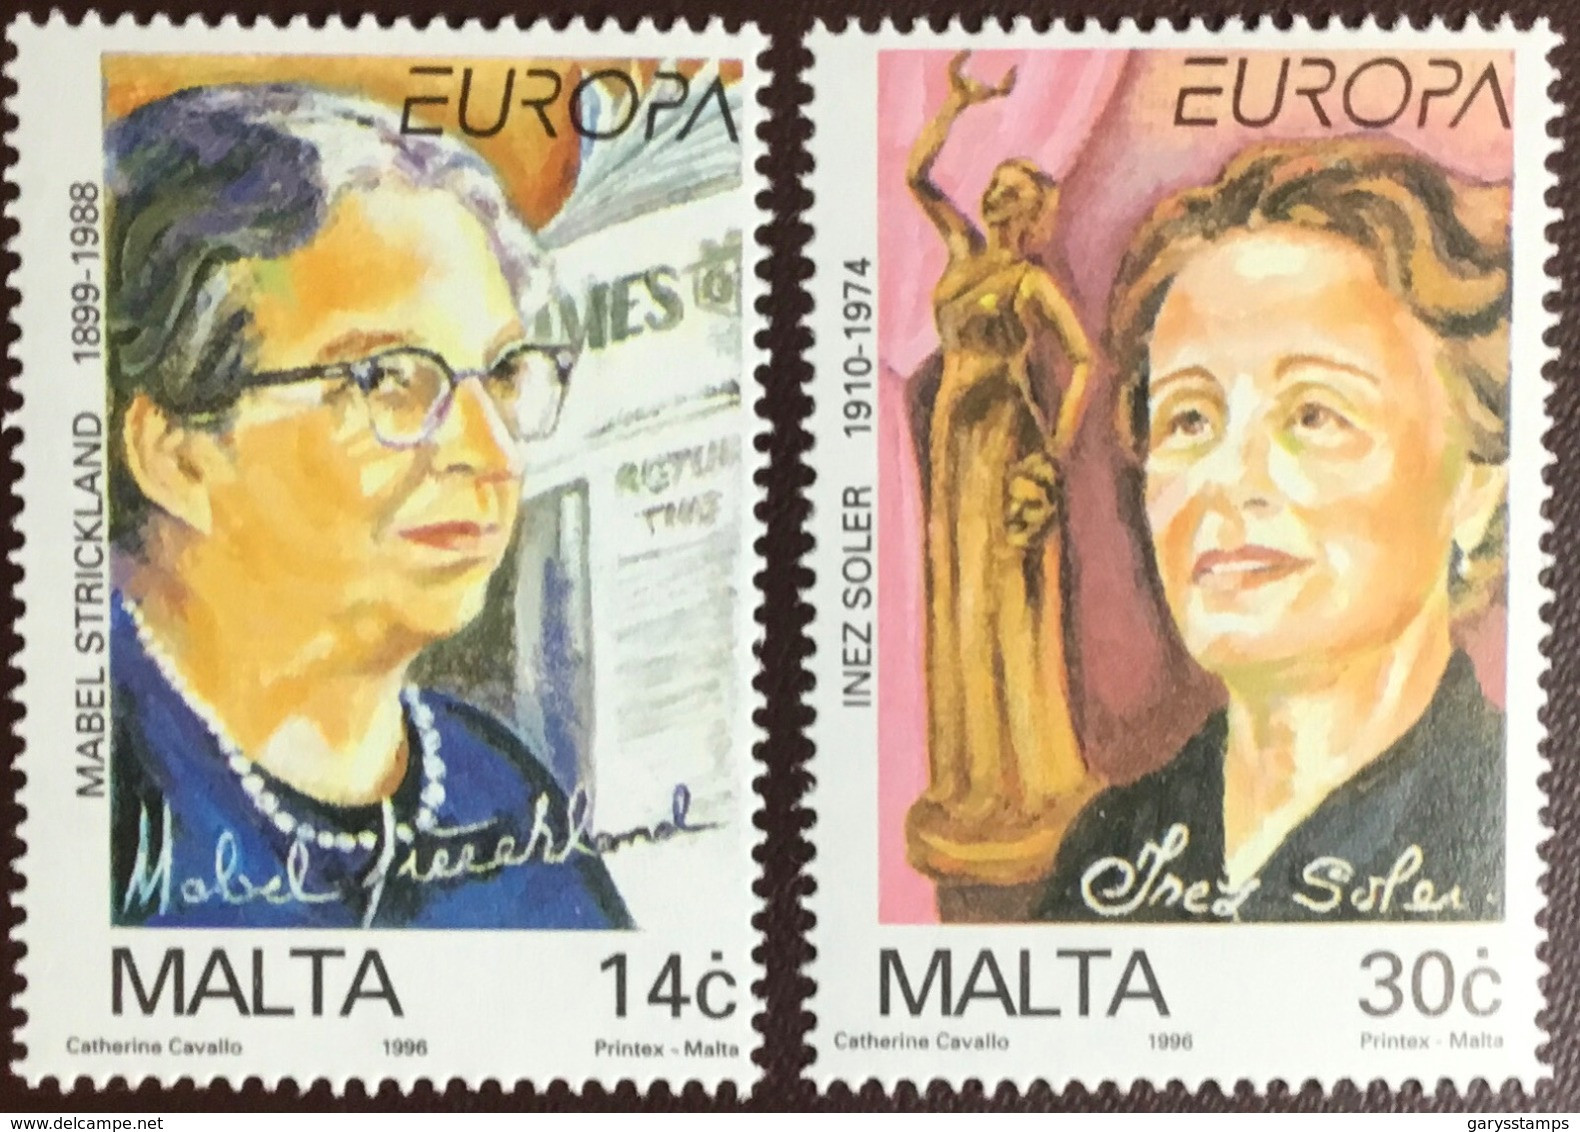 Malta 1996 Europa MNH - Malte